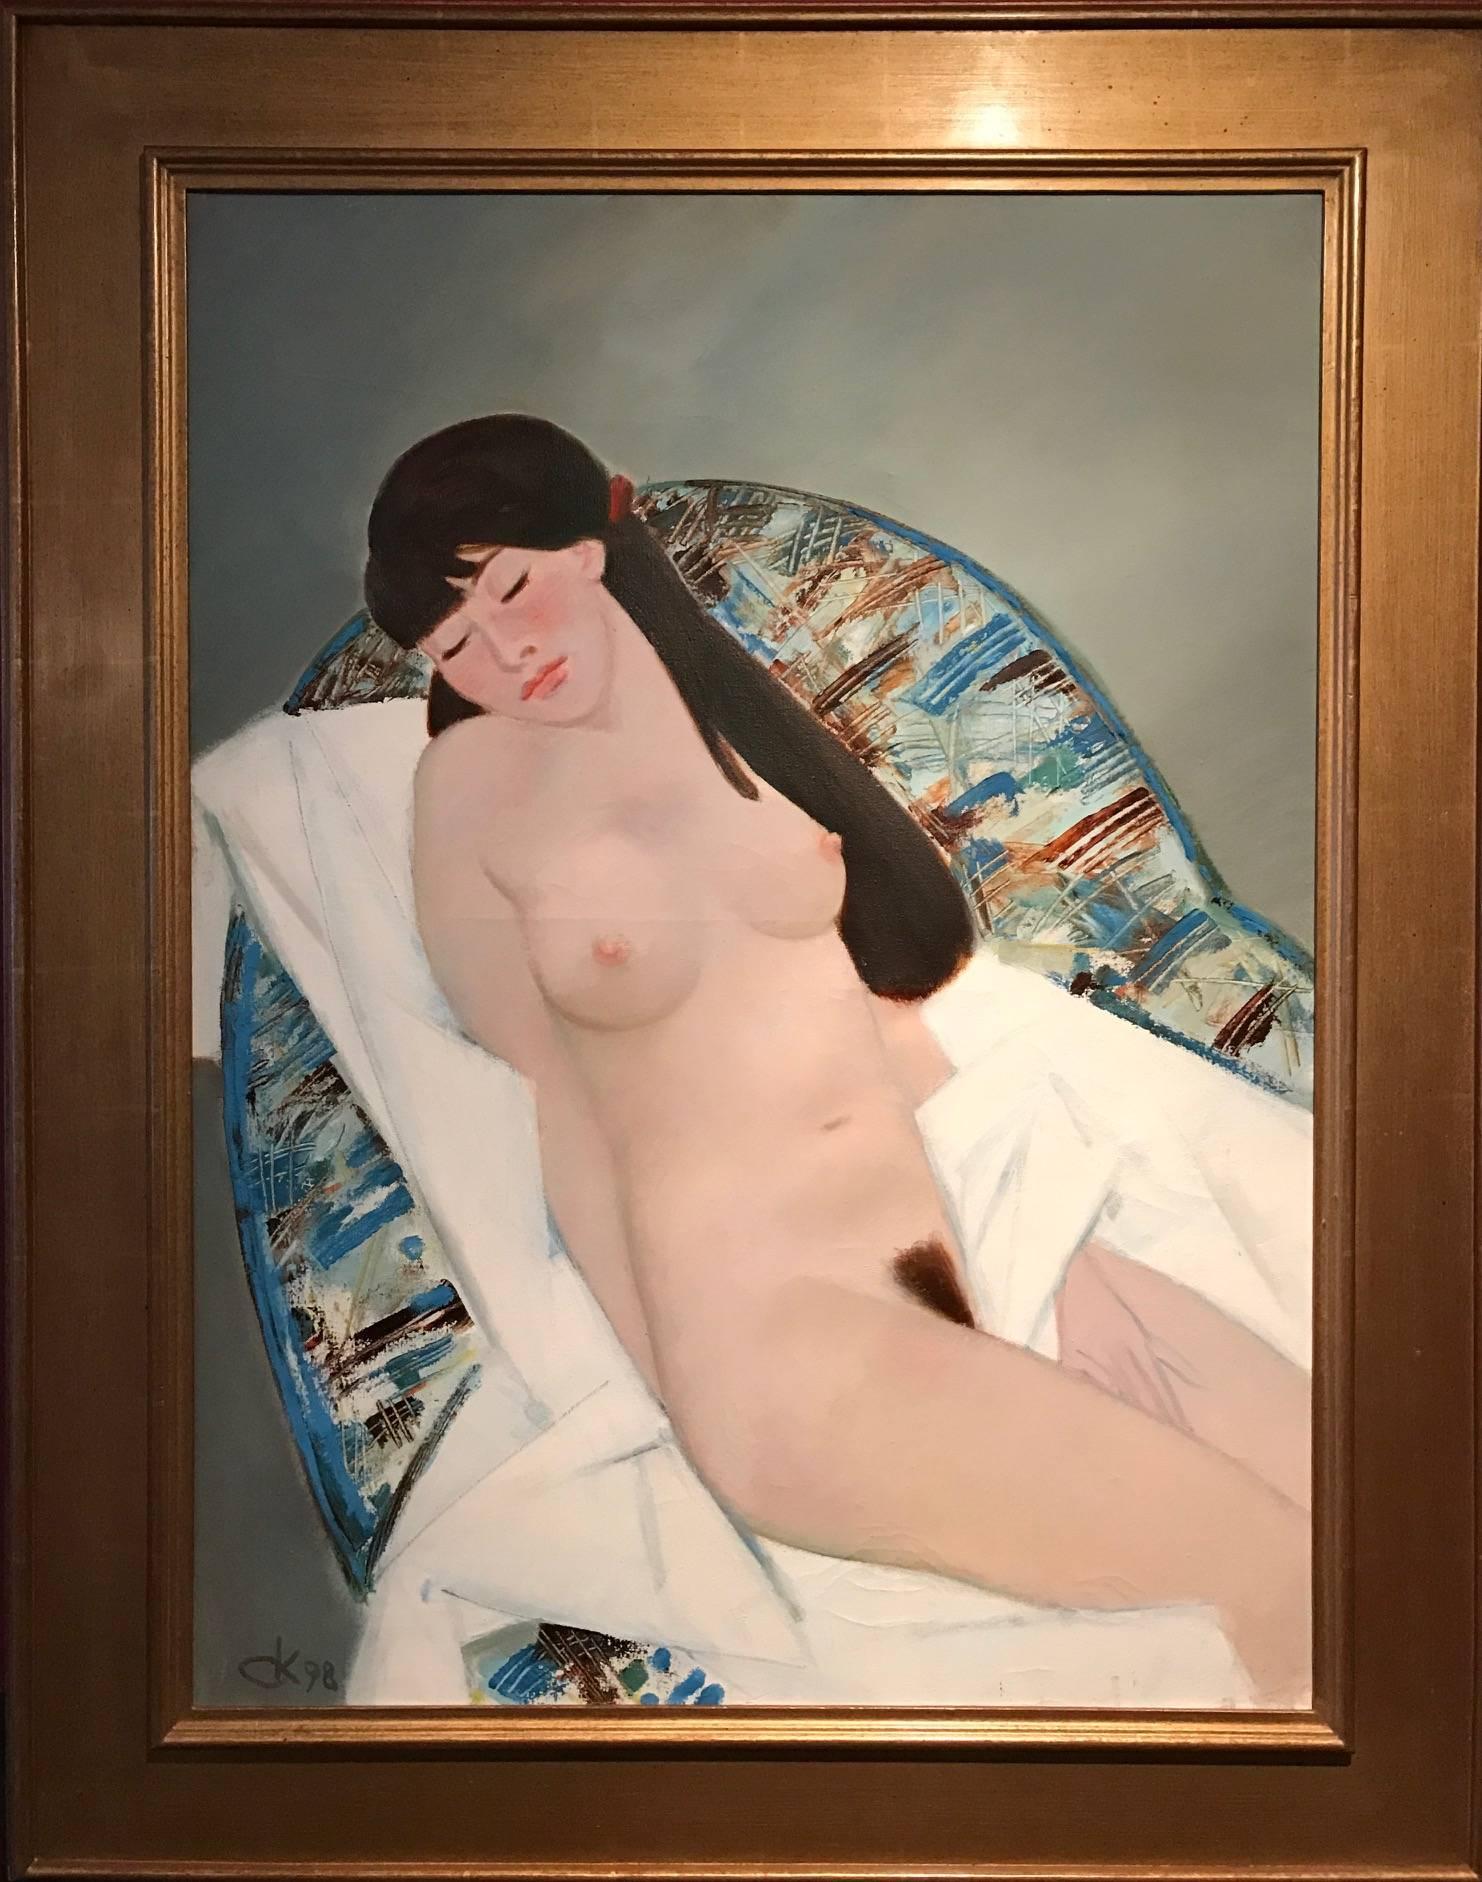 Sleeping Nude - Very Large Russian Modernist Oil Painting - Brown Nude Painting by Sergei Dmitrievich Kichko